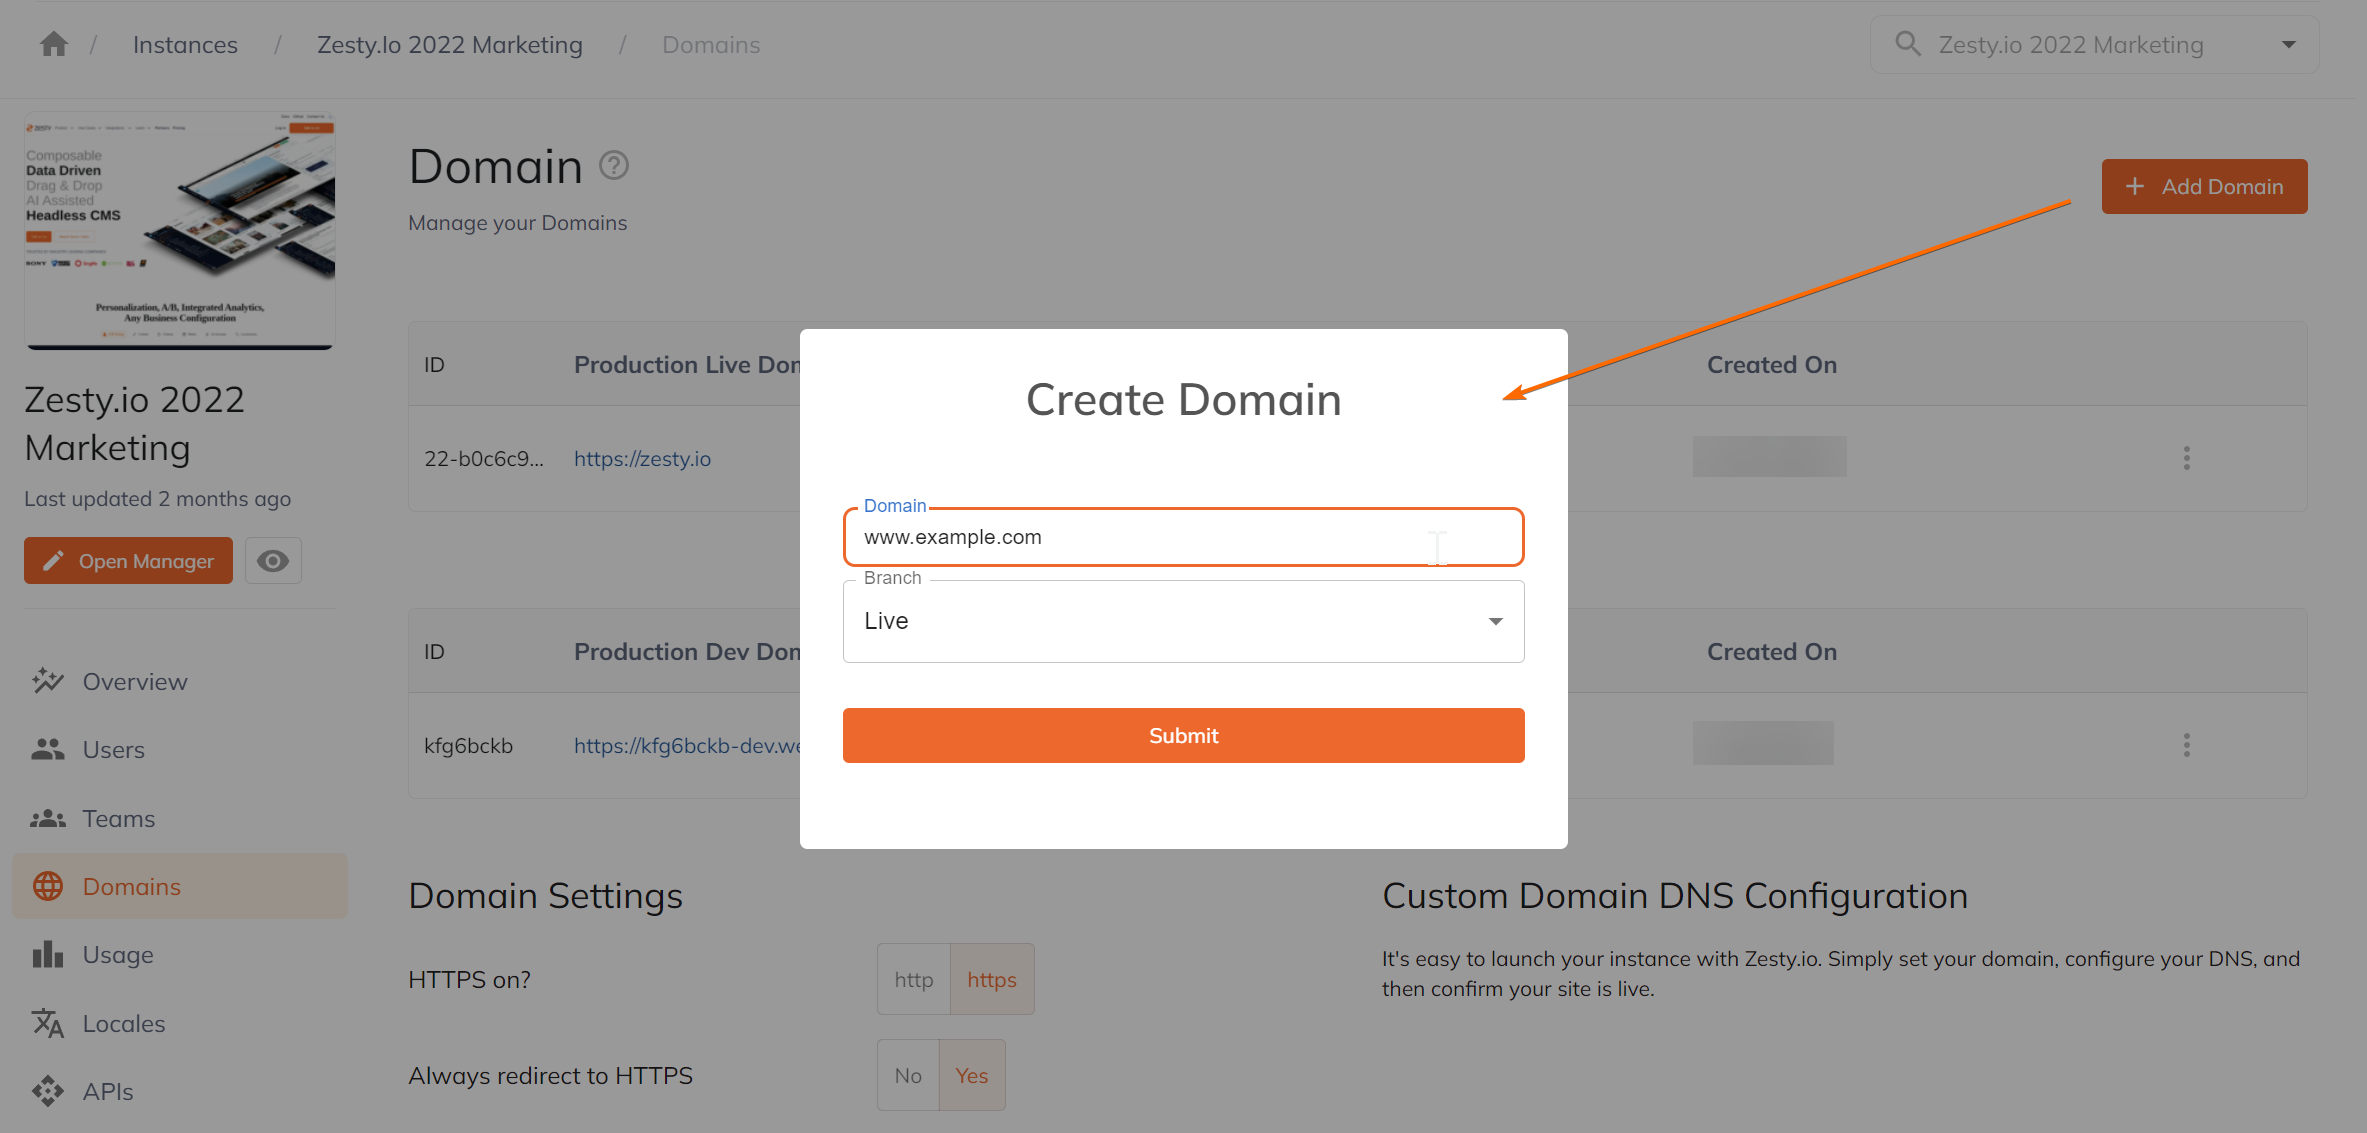 Custom Domain Configuration Submission